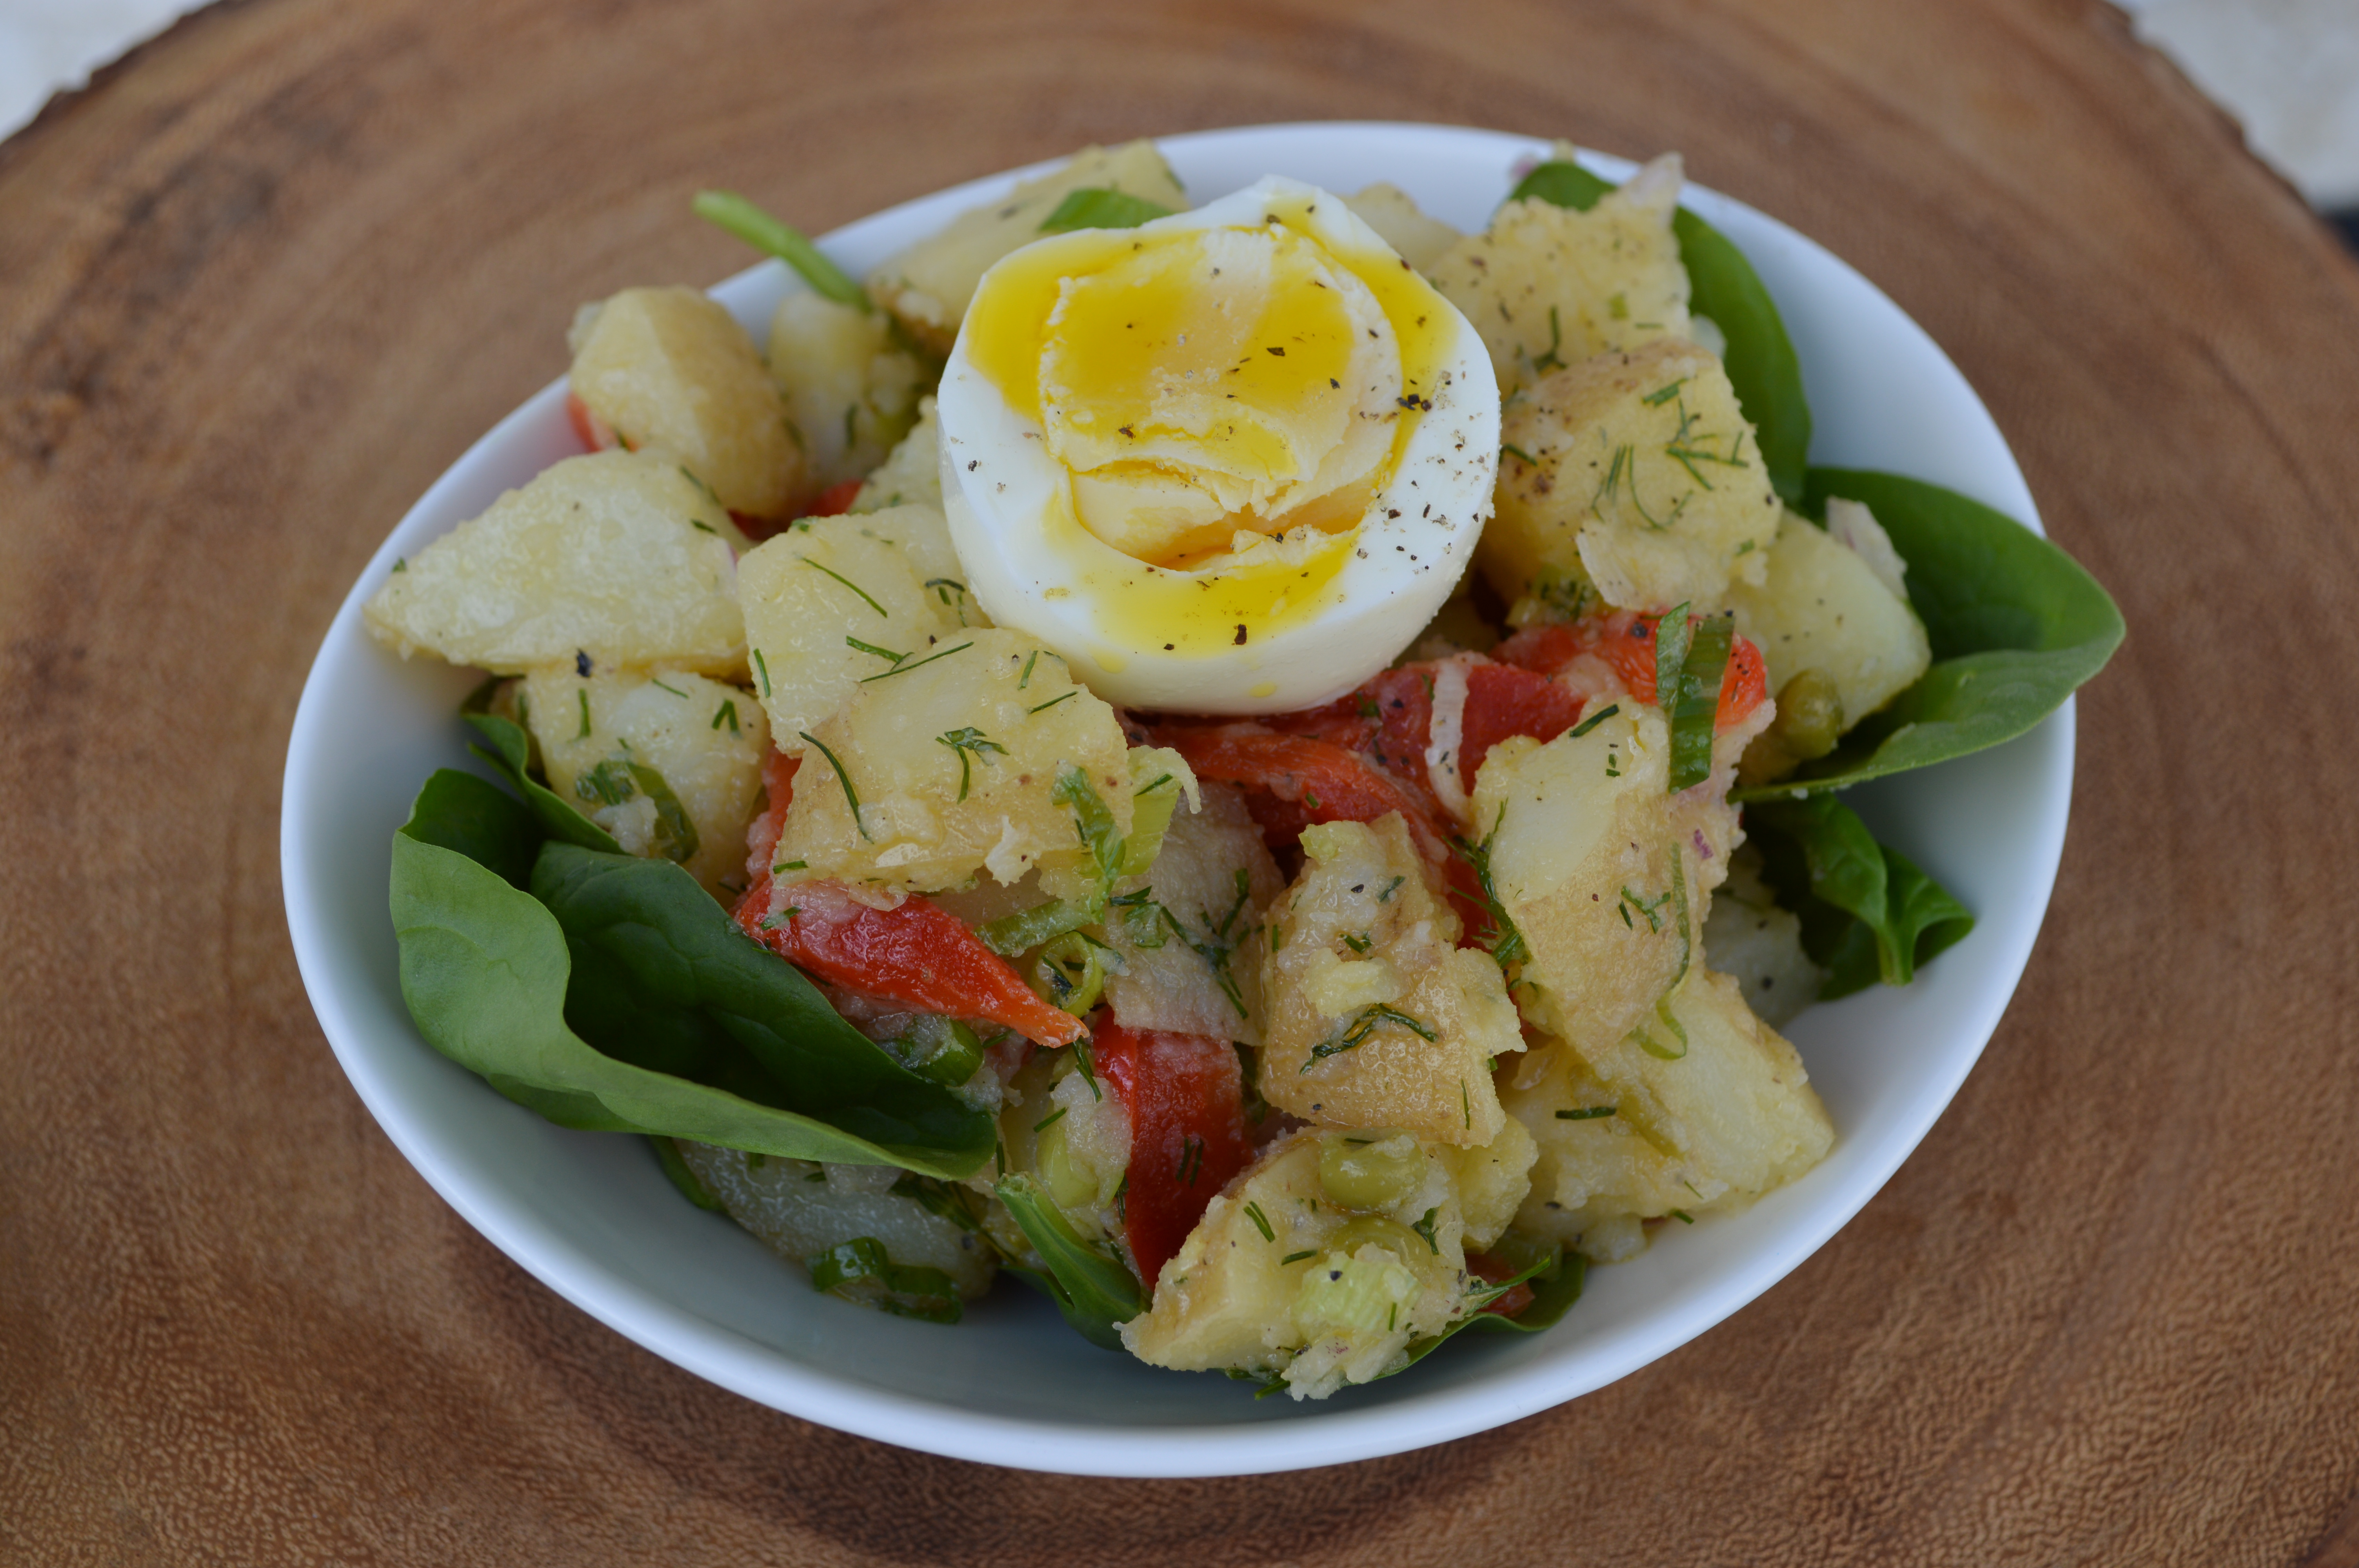 Potato salad with hard-cooked egg.